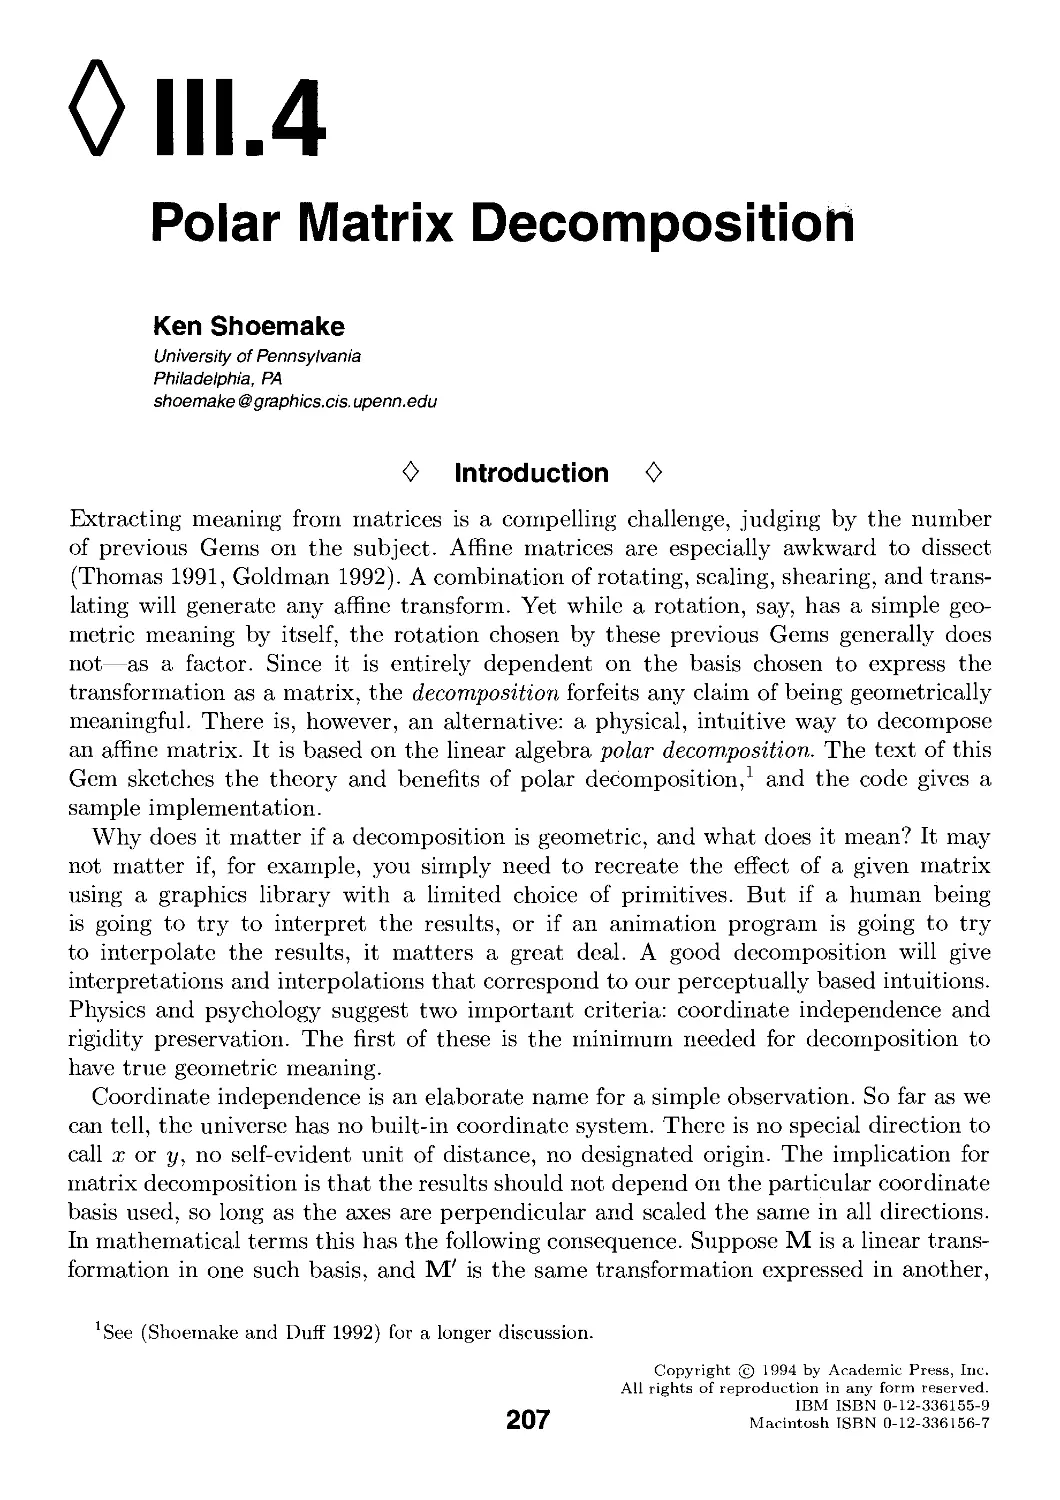 III.4. Polar Matrix Decomposition by Ken Shoemake